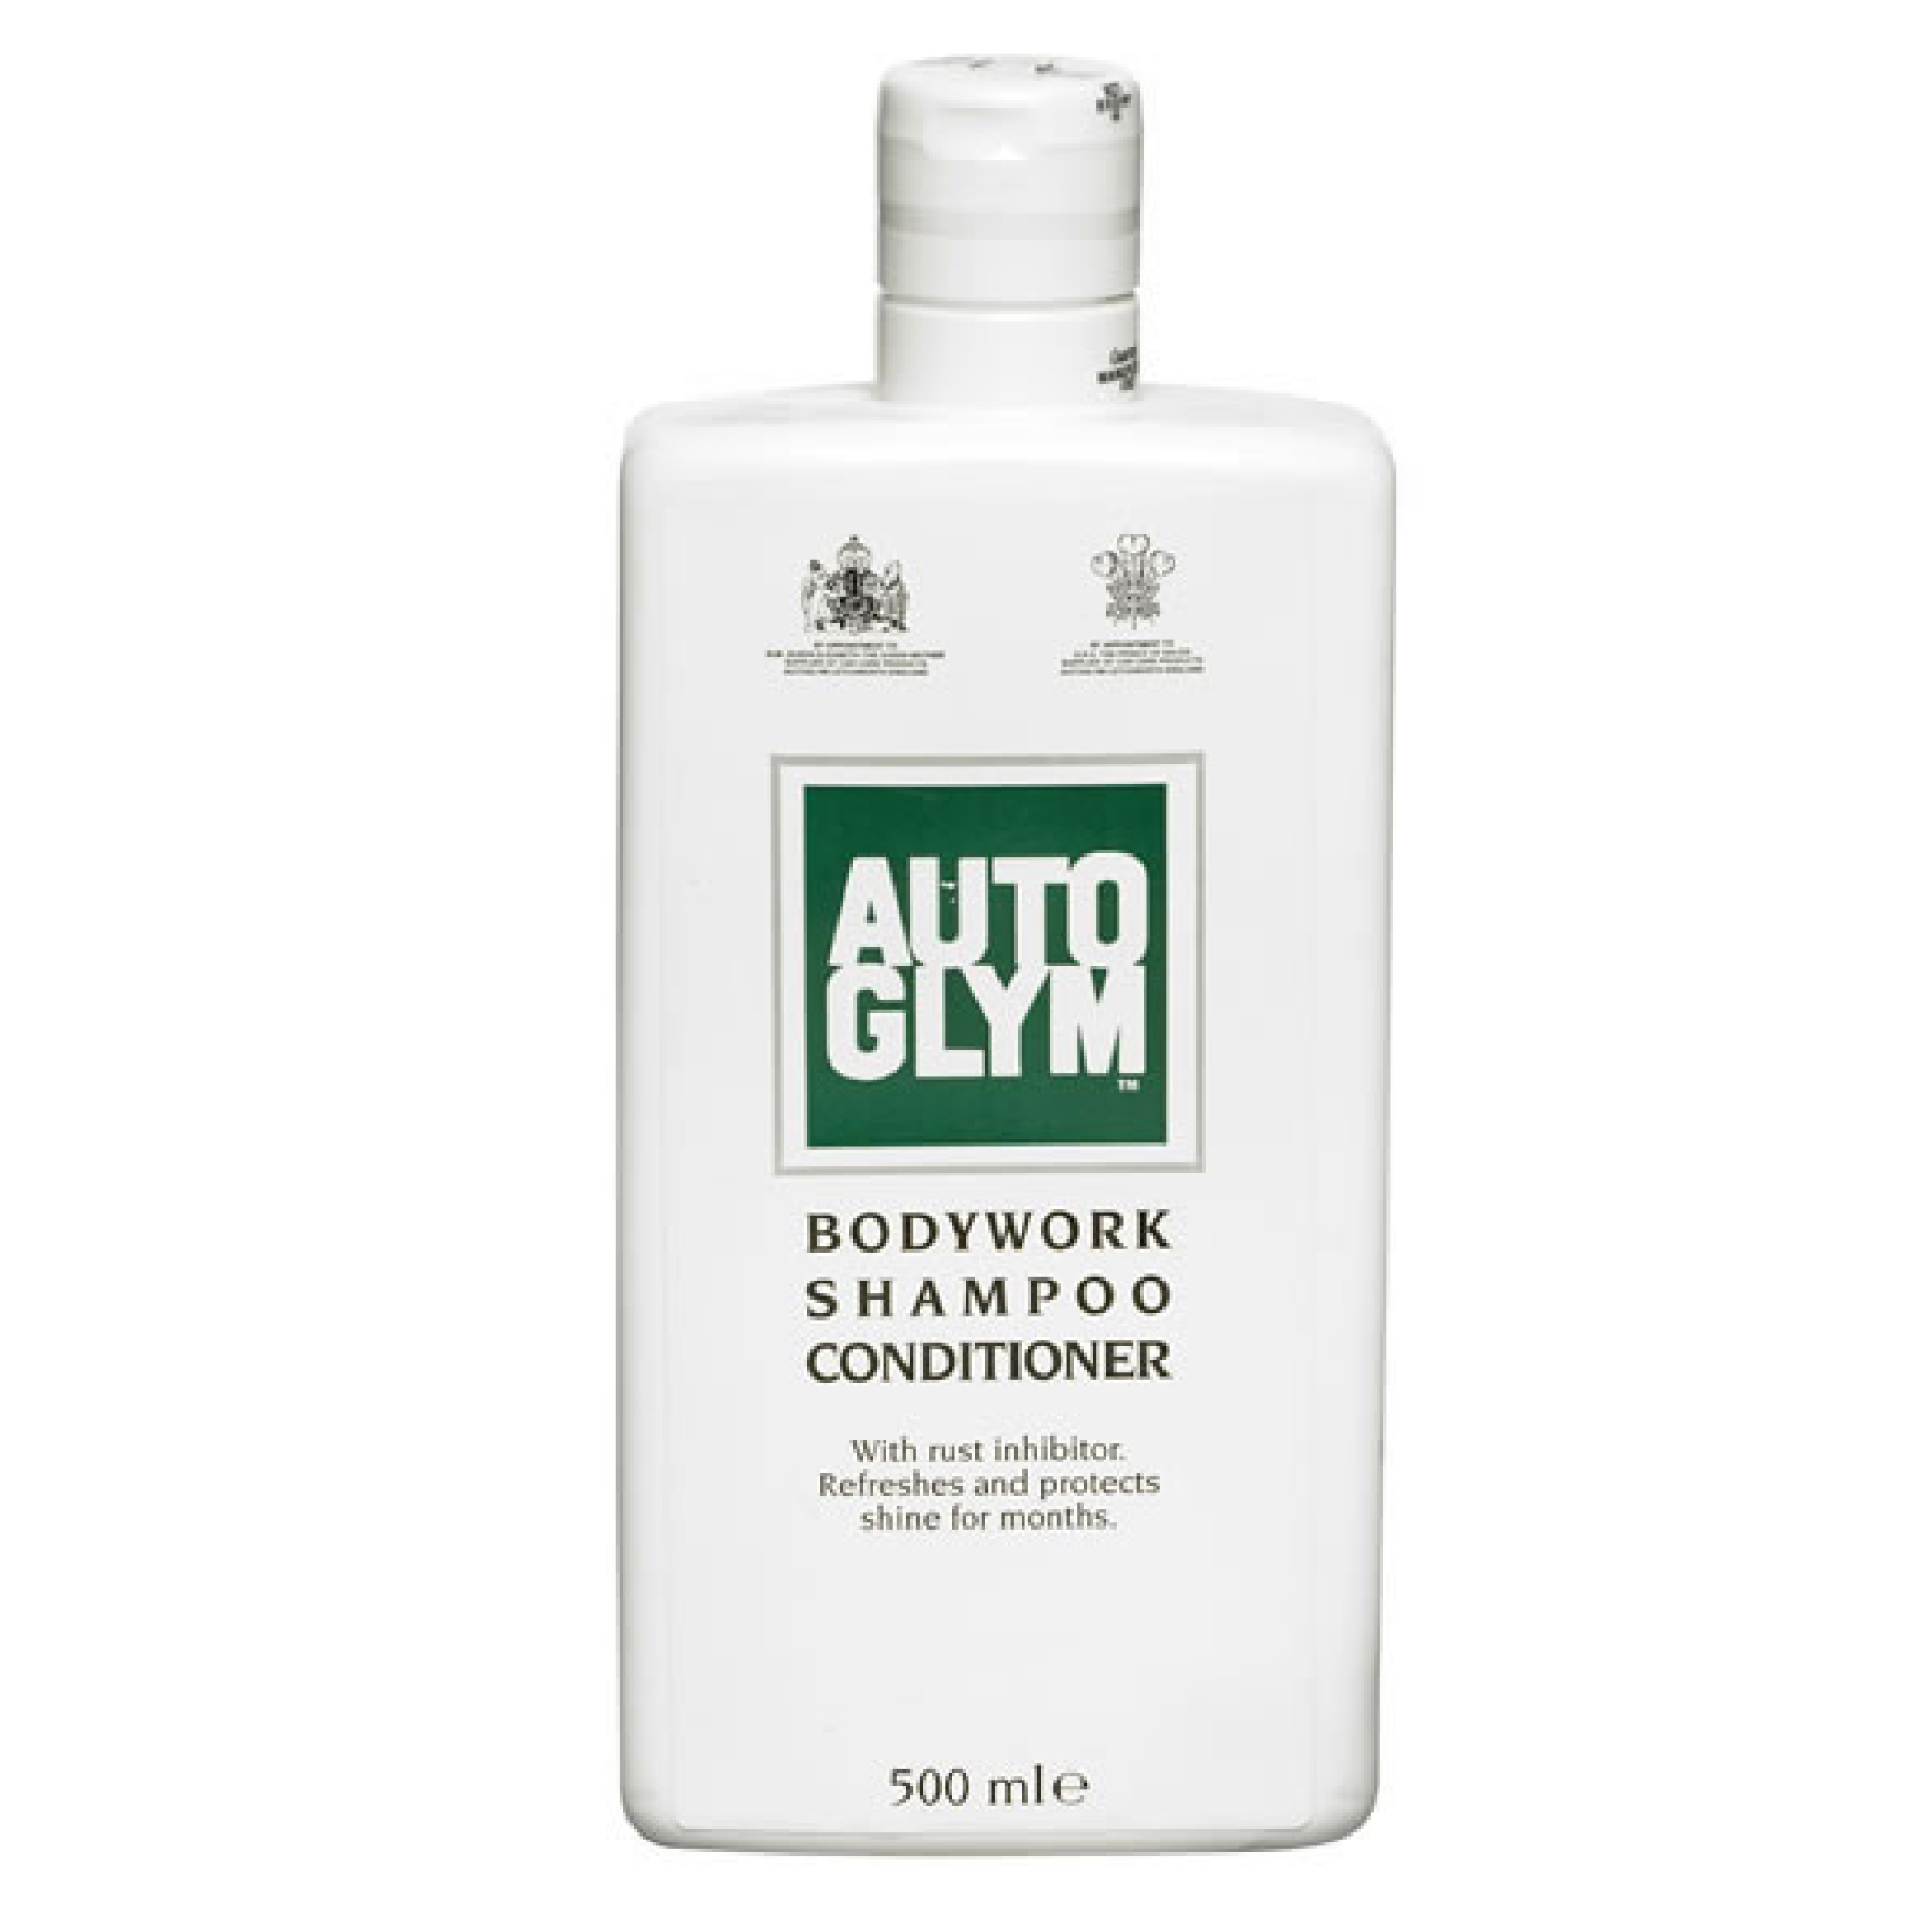 AUTOGLYM Bodywork Shampoo Conditioner 500ML